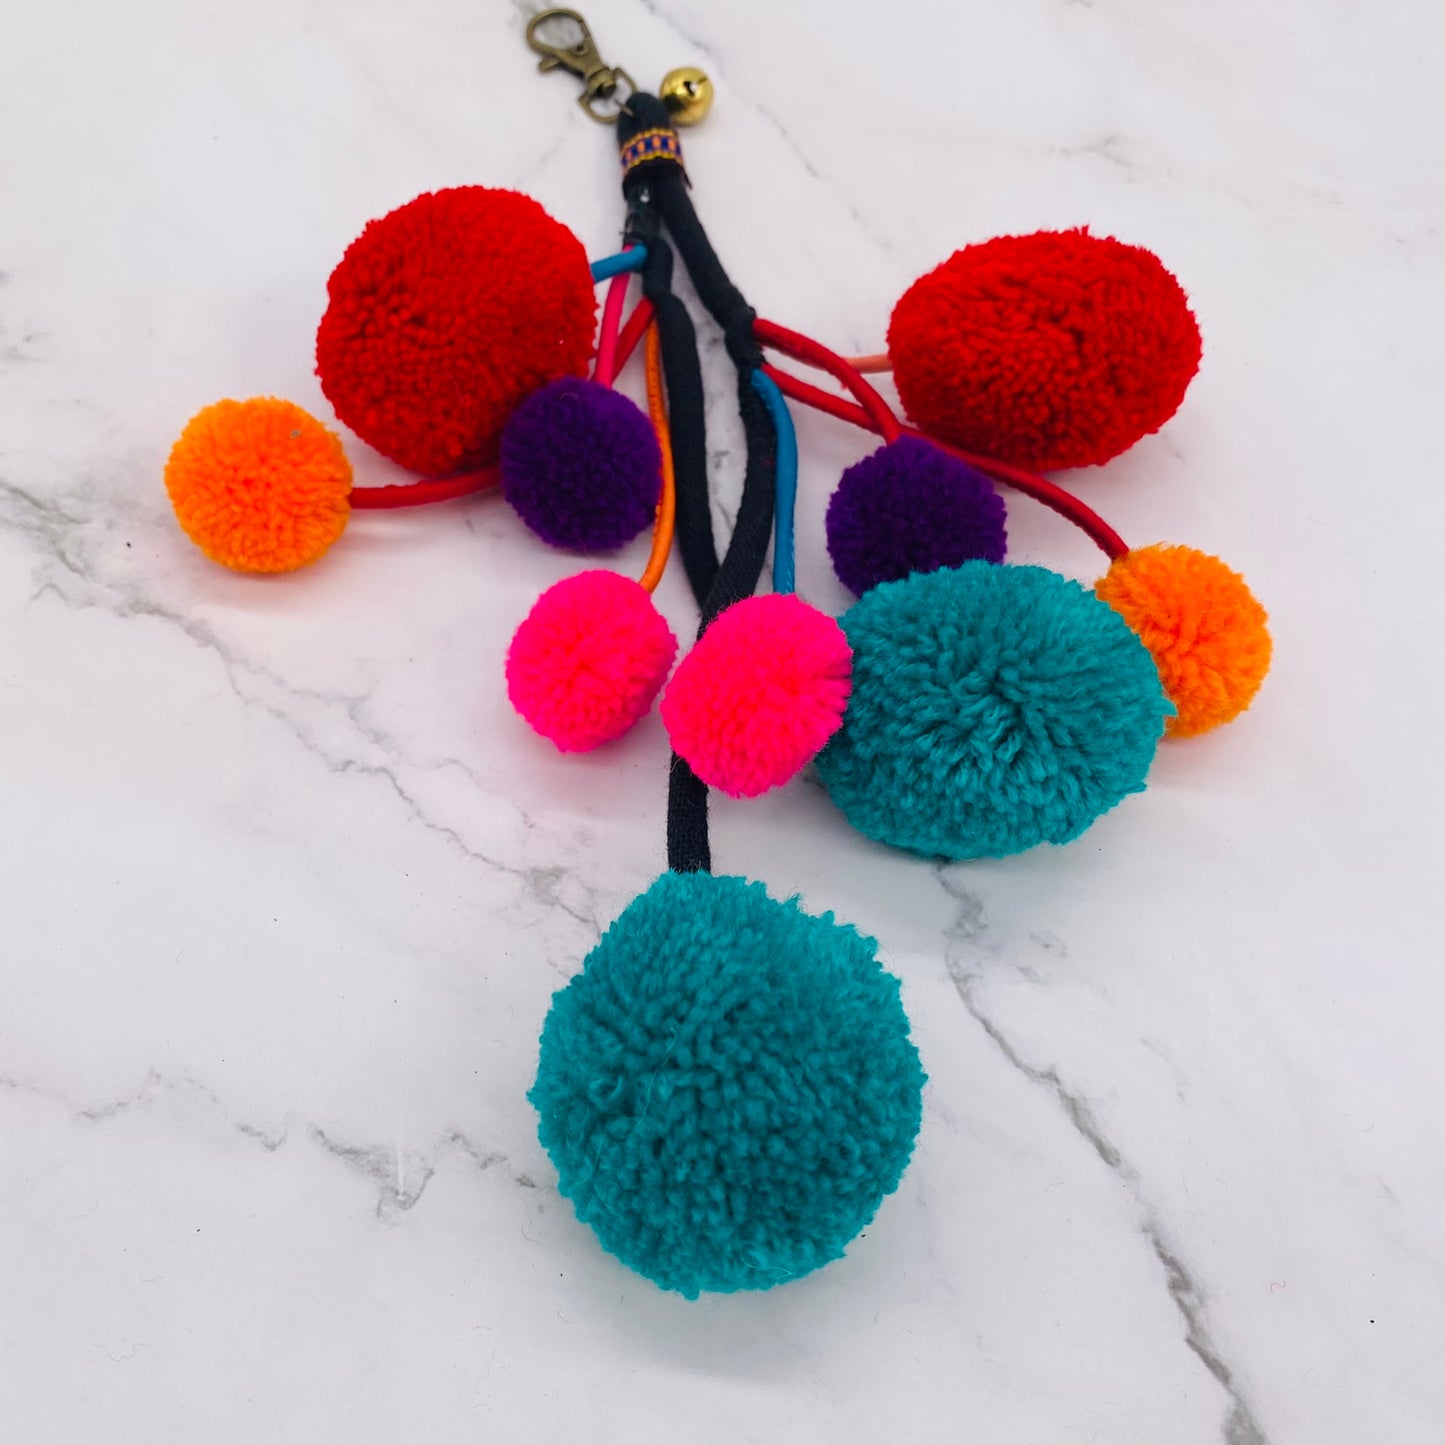 karmanepalcrafts Owl Keychain, Colorful Owl Bag Charm, Bag Accessories, Handmade Bag Charm, Cute Key Ring, Gift for Her, Symbol of Wisdom Orange